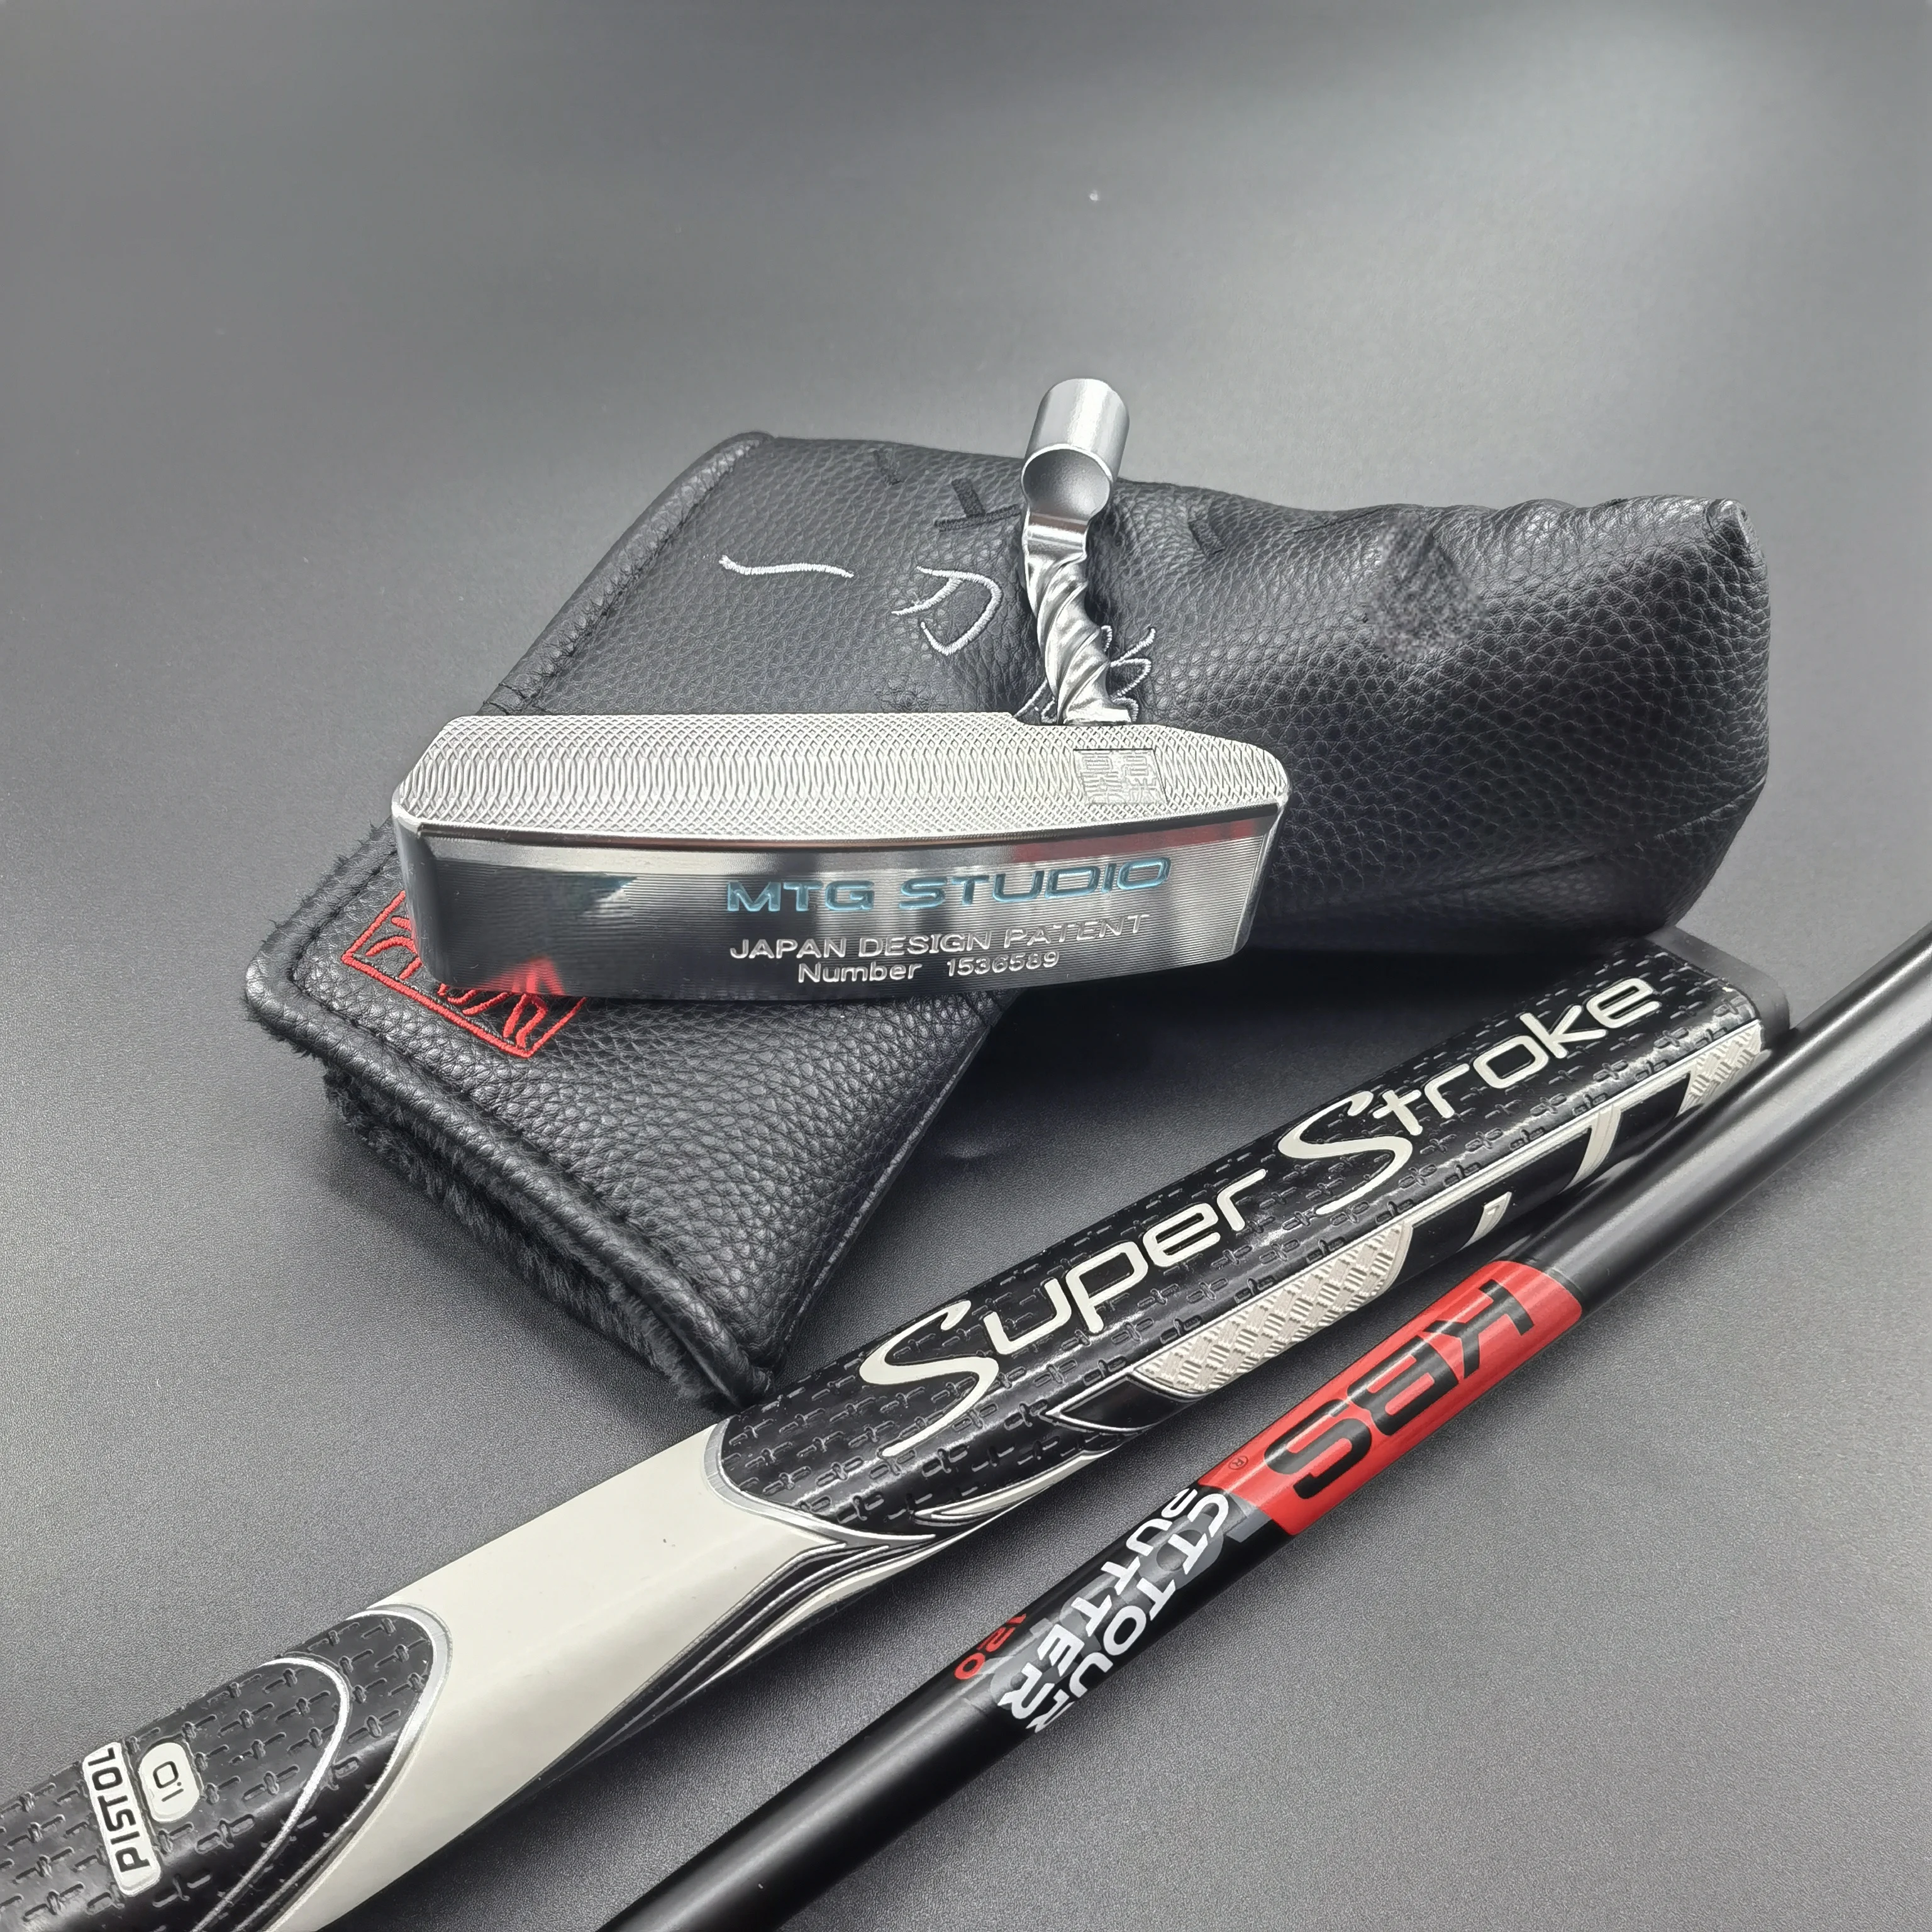 

One knife carving putter silver/black step or distort golf neck genuine Stainless steel golf clubs KBS black shaft SS golf grip